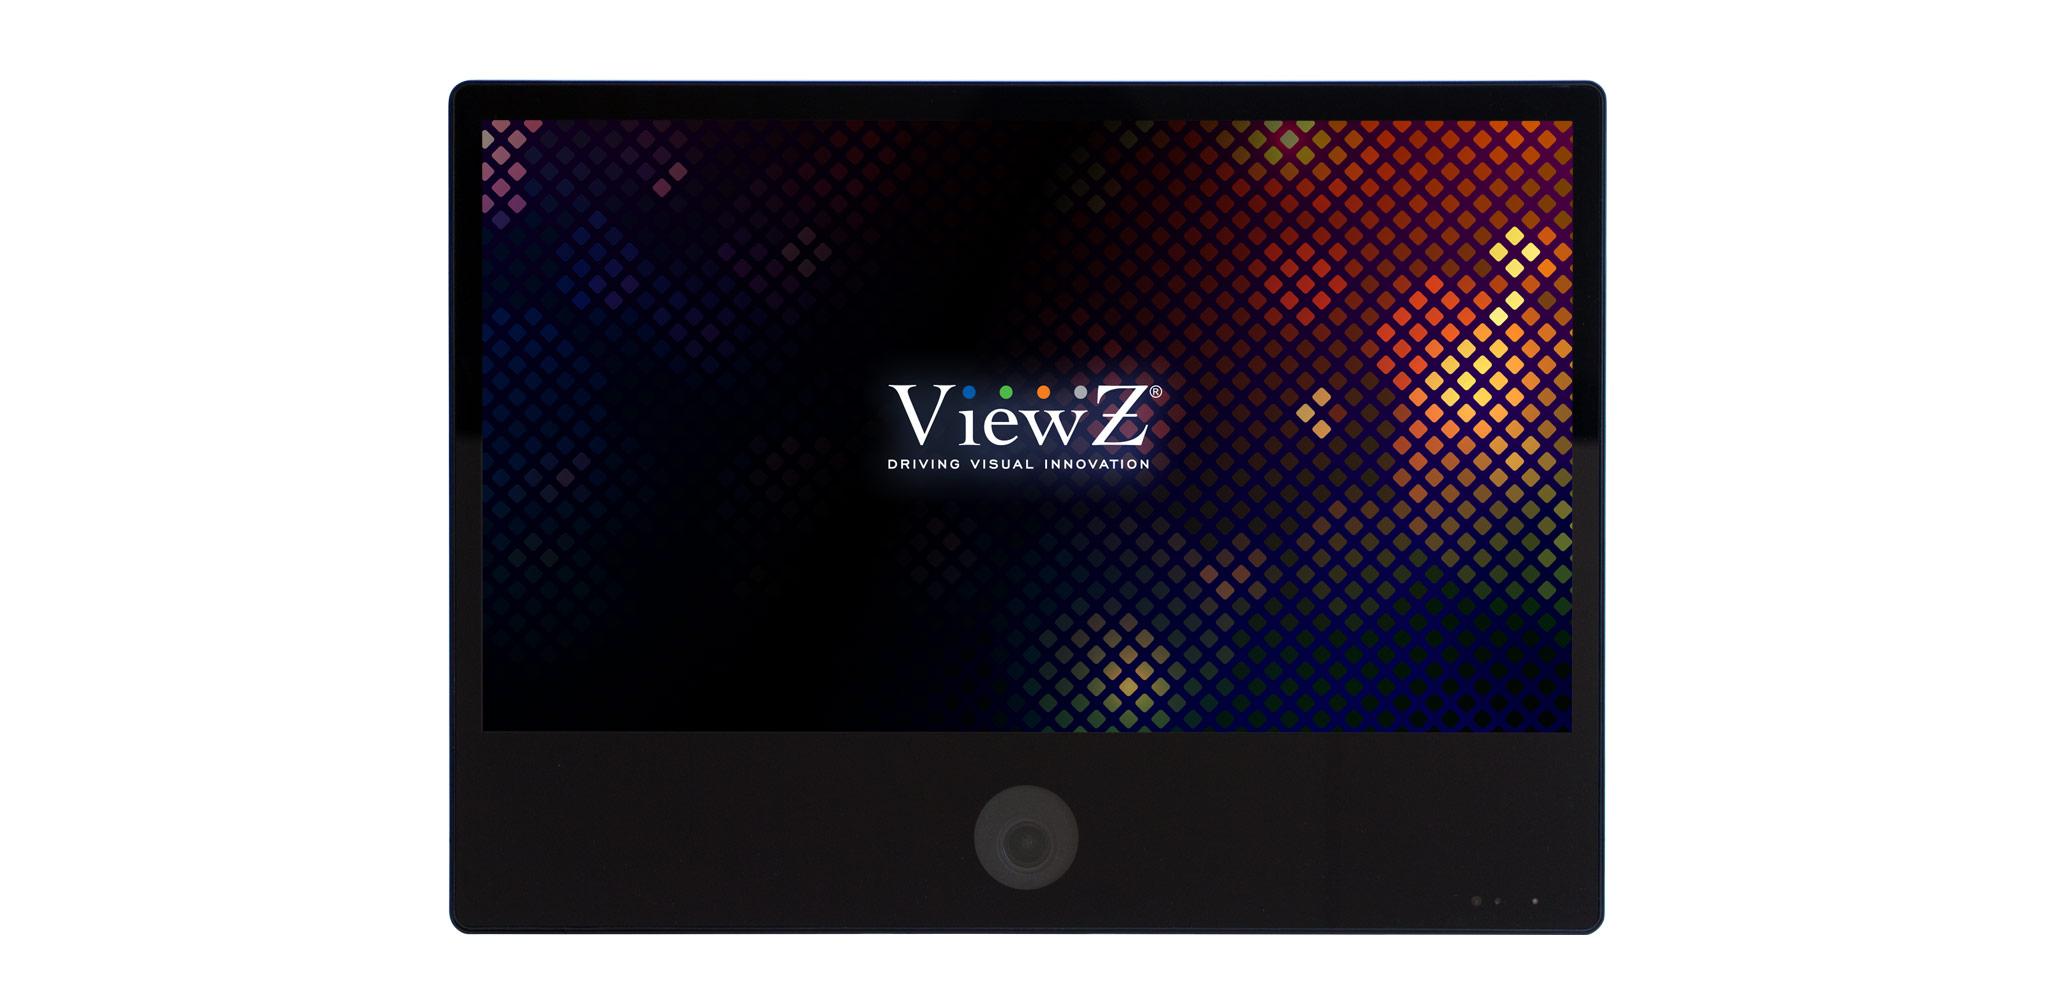 VZ-PVM-I2B3N 23.6 inch 1920x1080 IP Based Public View Monitor with 2MP Camera/Black by ViewZ